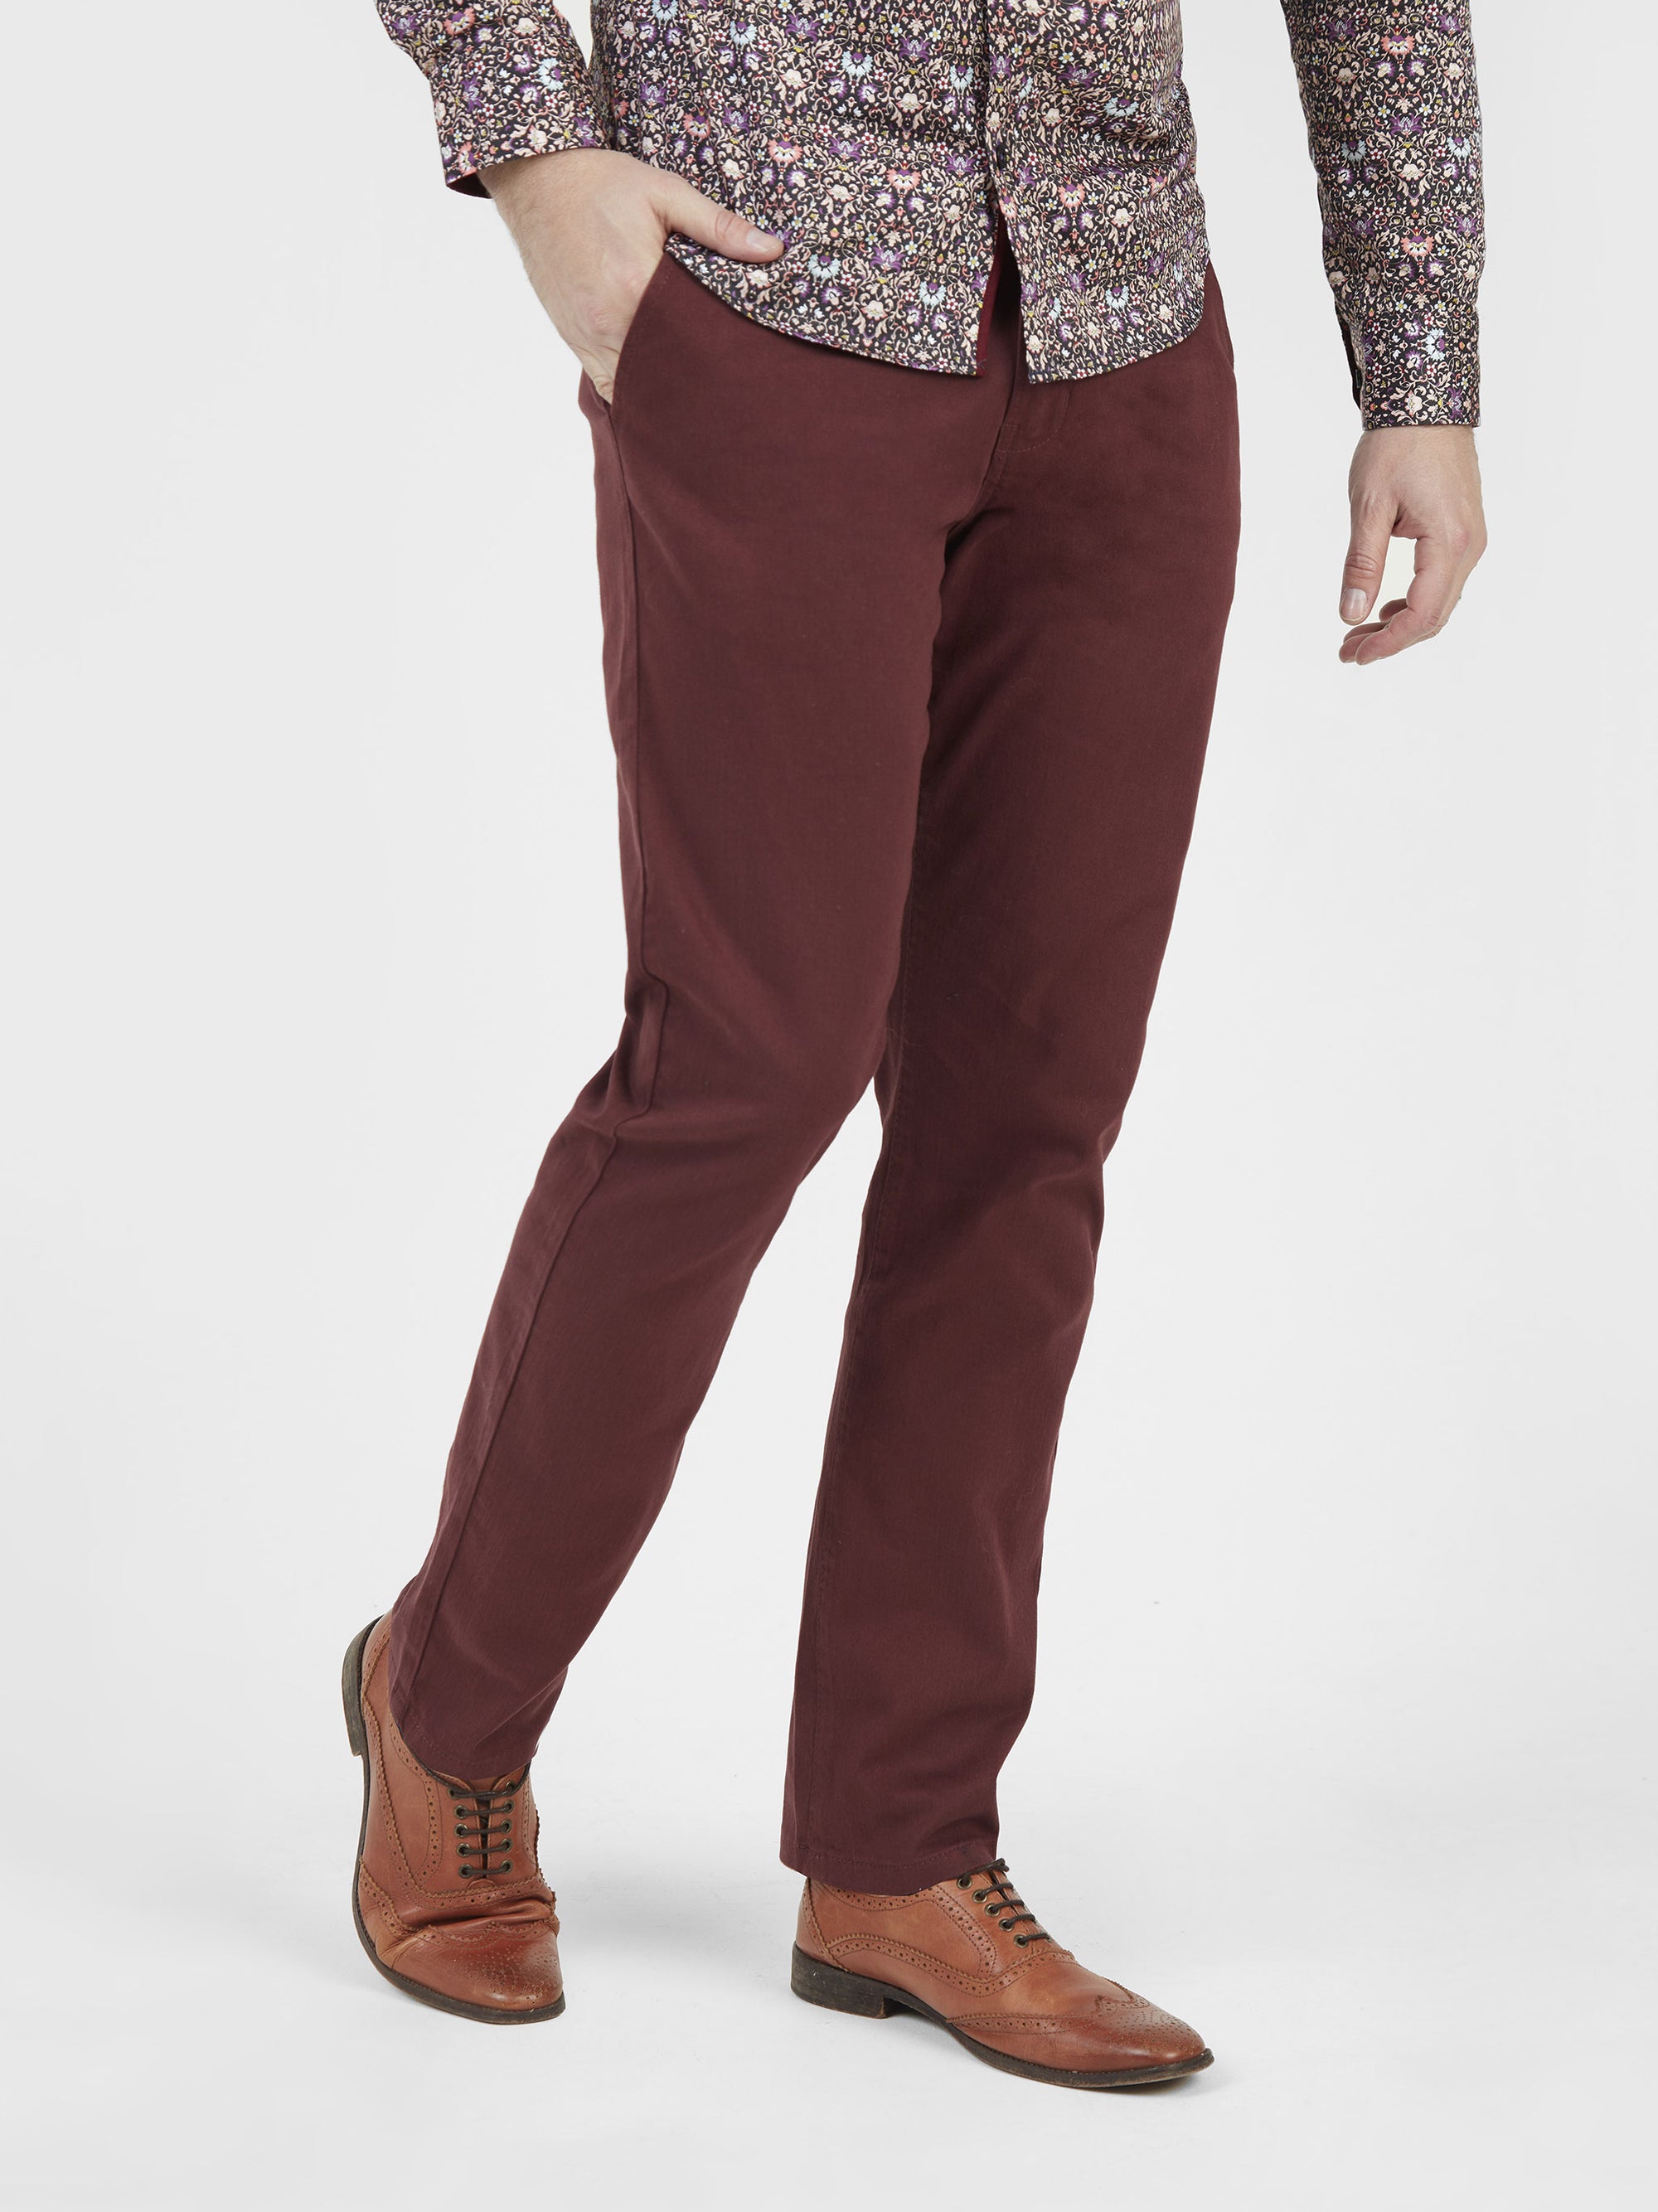 Cotton stretch mens chino trouser burgundy mish mash jeans